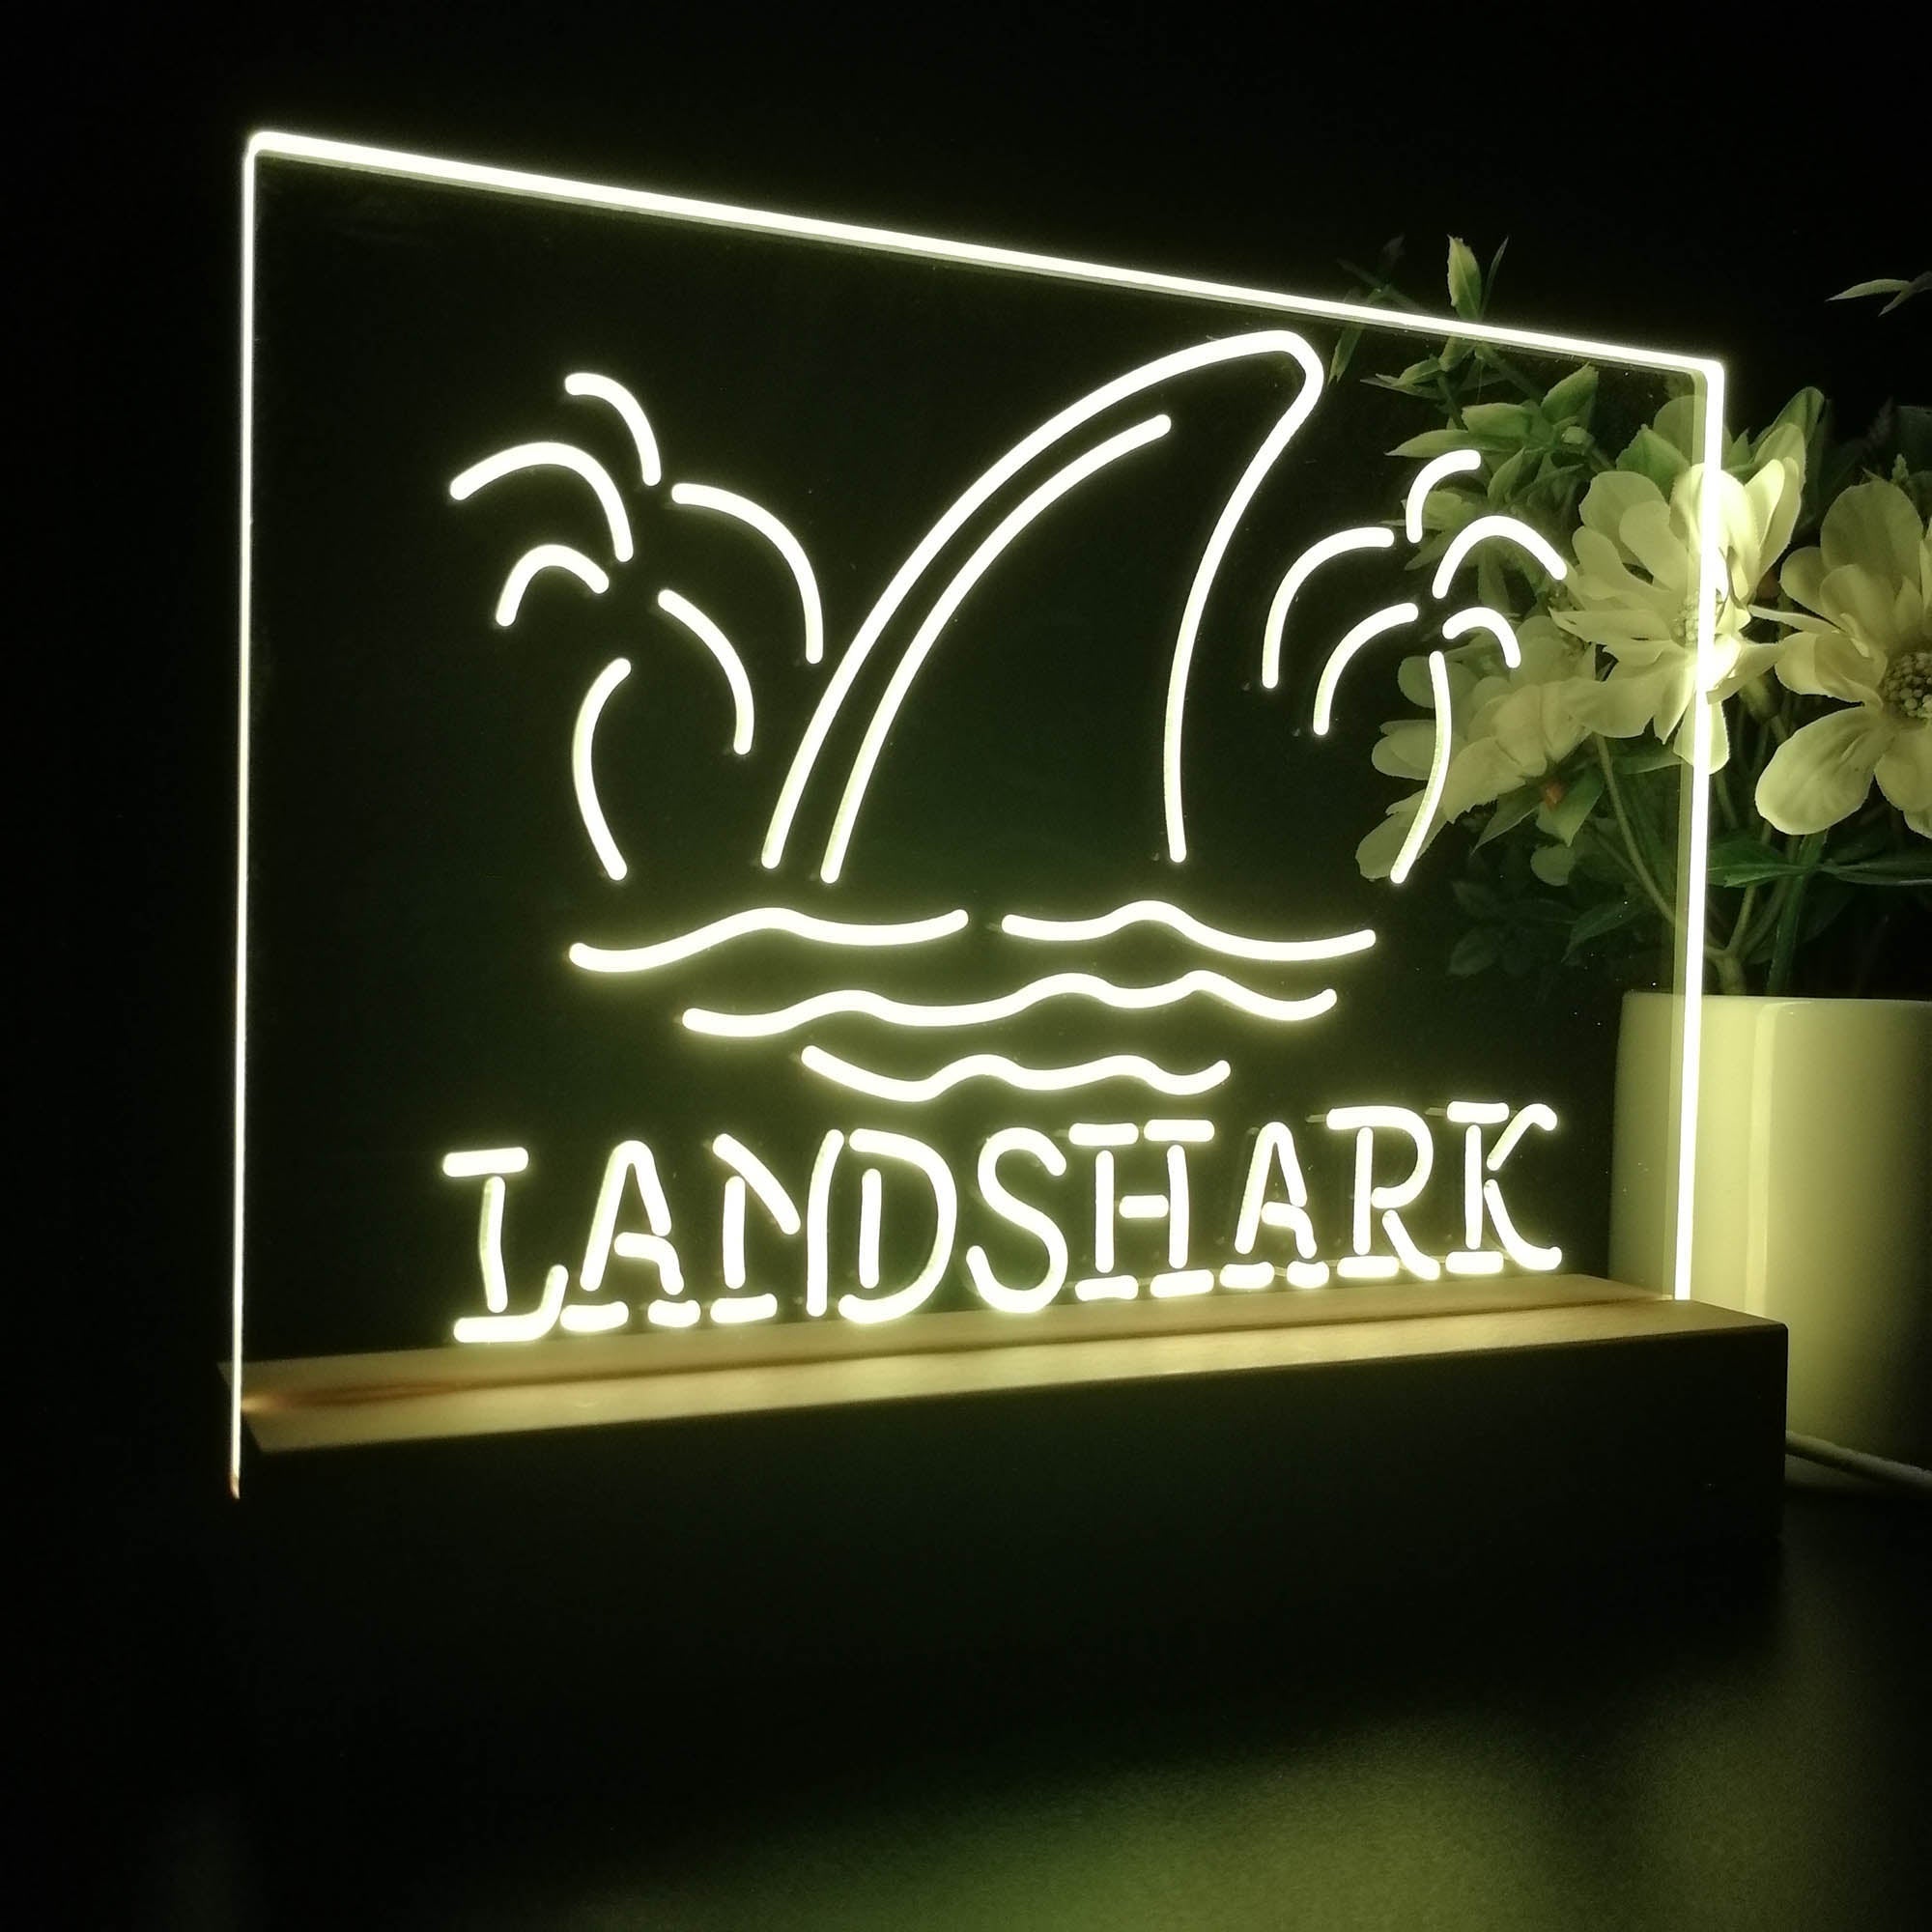 Landshark Palm Tree Island Neon Sign Pub Bar Lamp